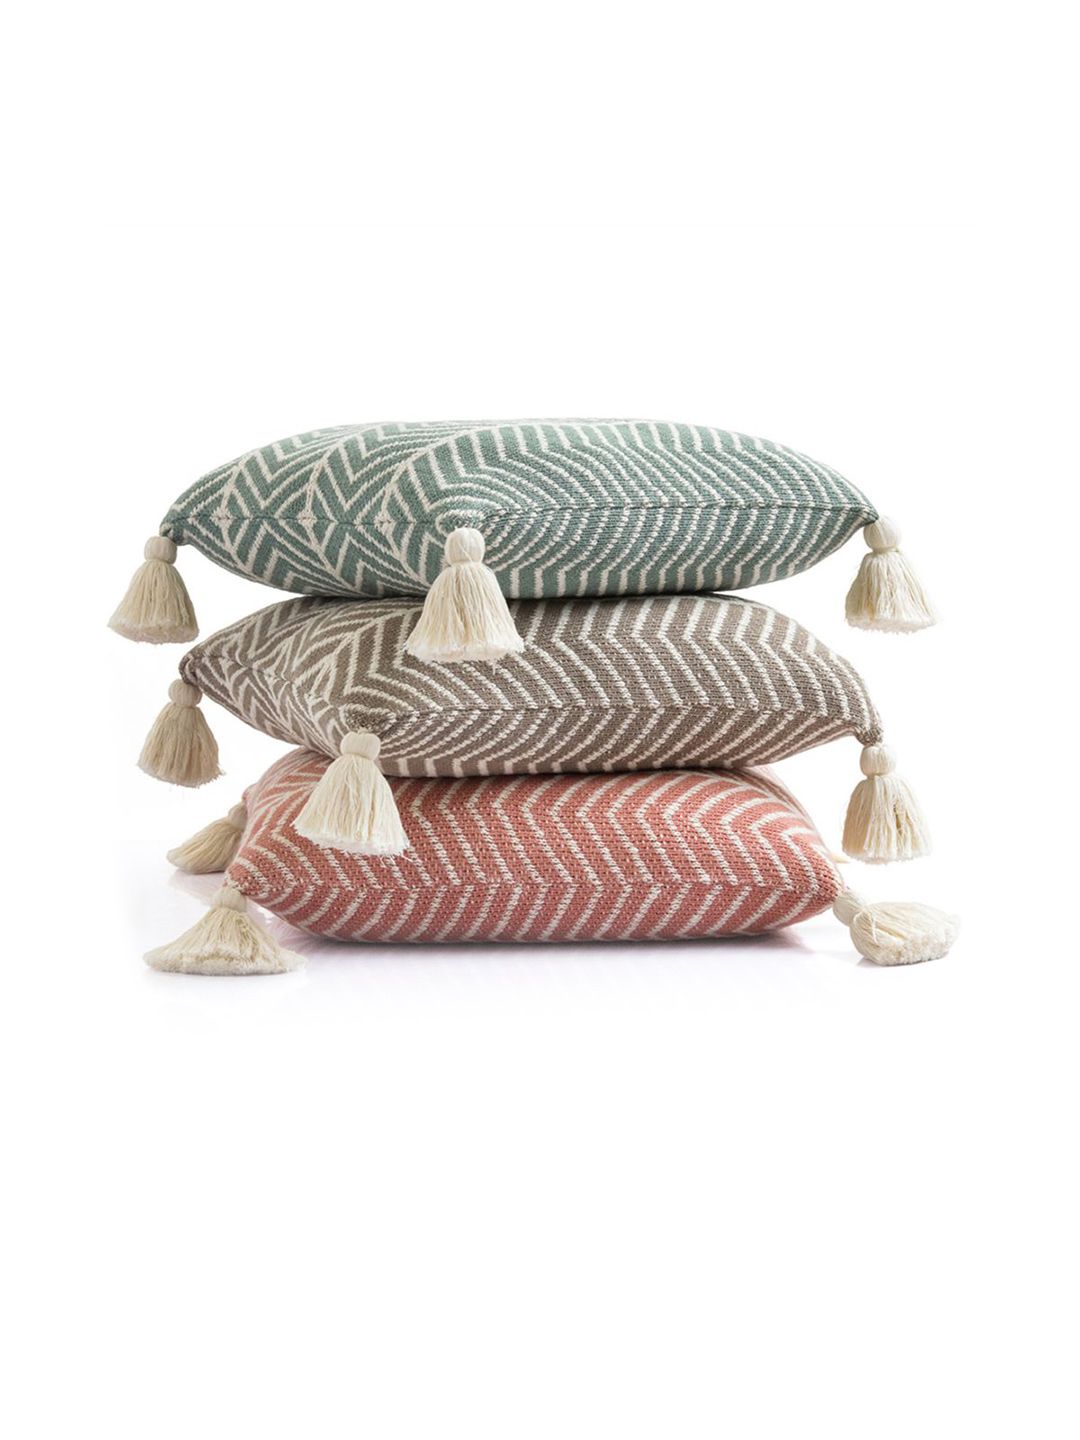 Pluchi Green & Cream-Coloured Square Cotton Cushion Covers Price in India